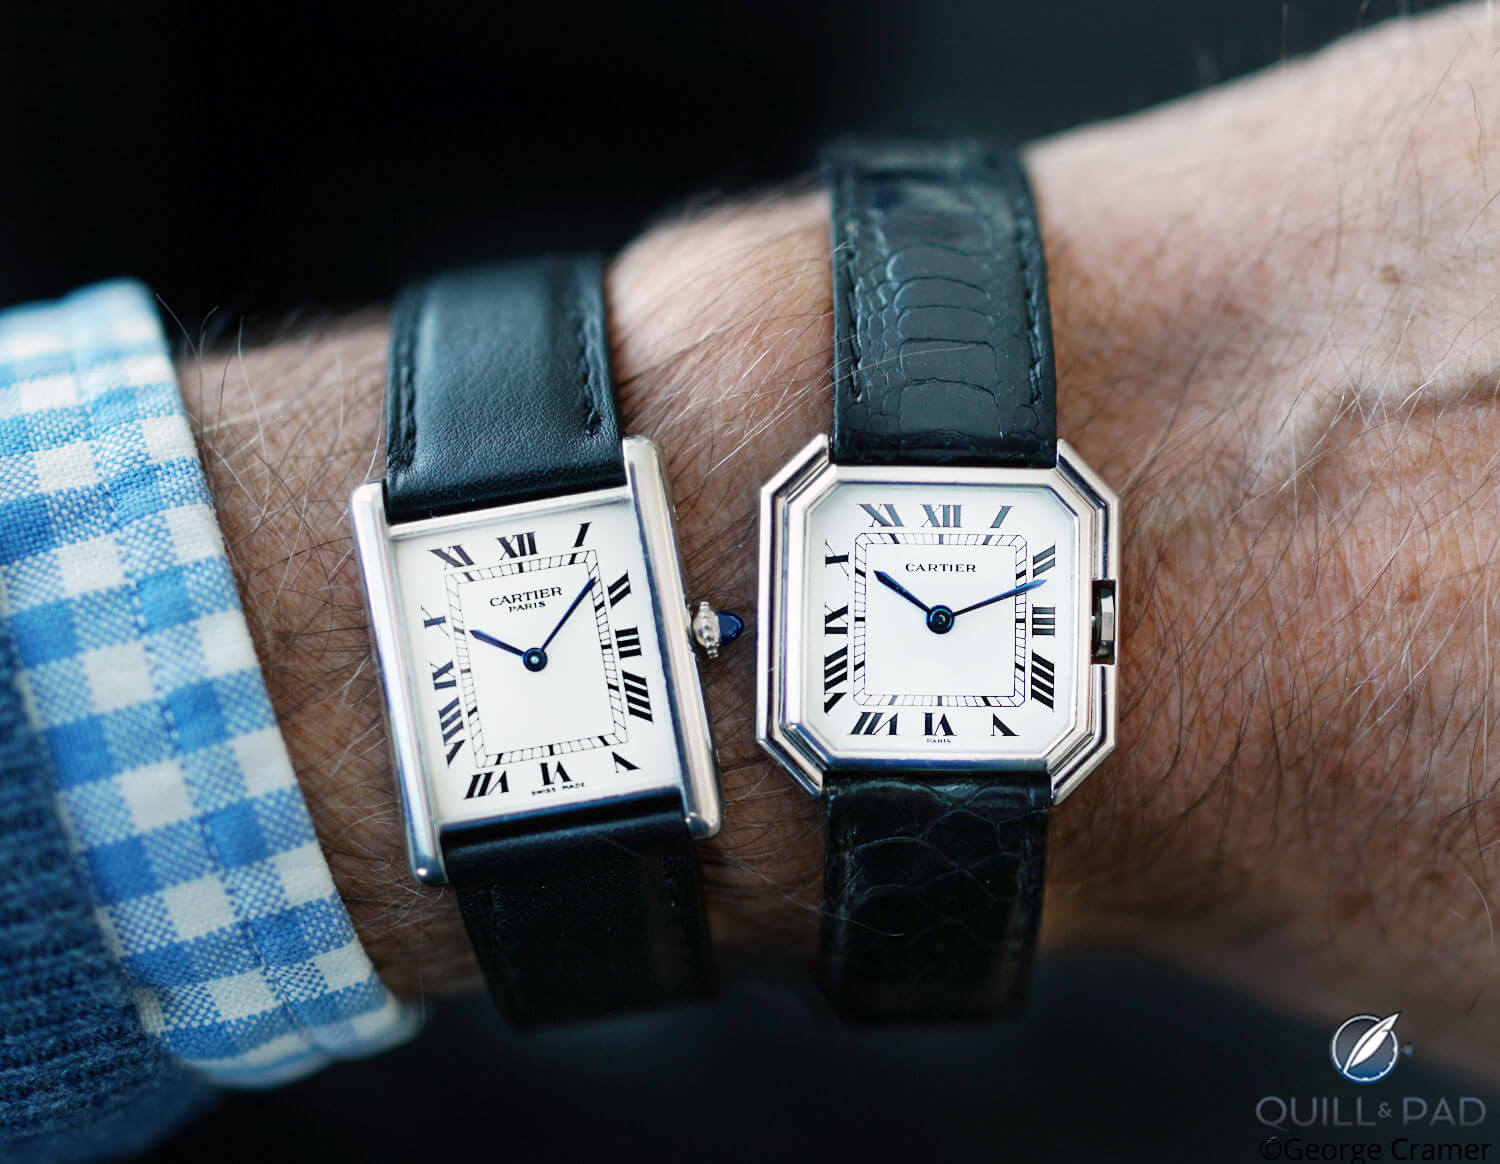 Louis Cartier (left) and Cartier Ceinture on the wrist